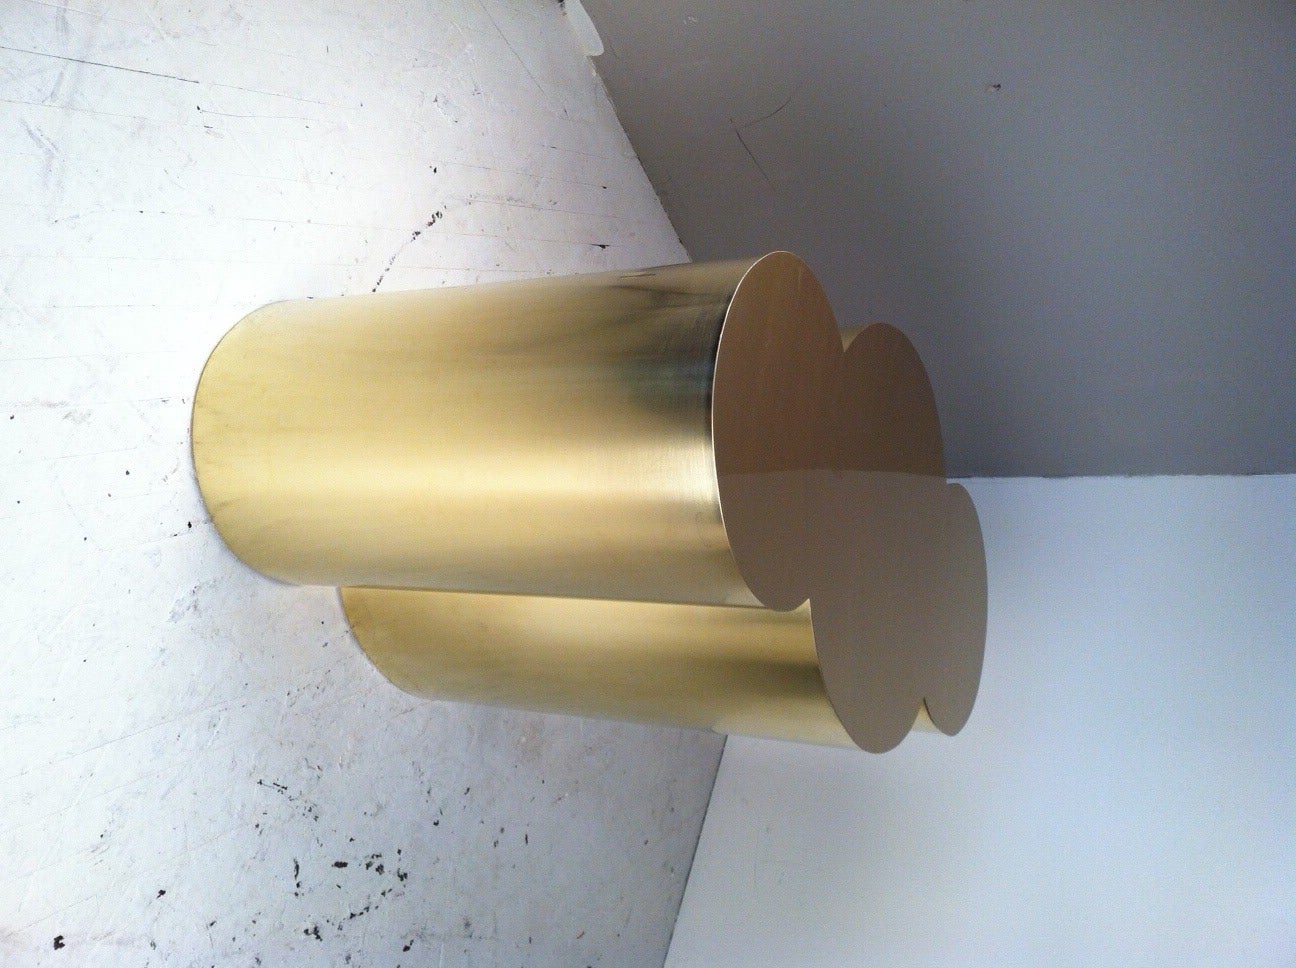 Hollywood Regency Custom Cloud Table Base in Polished Brass by Refine Studio